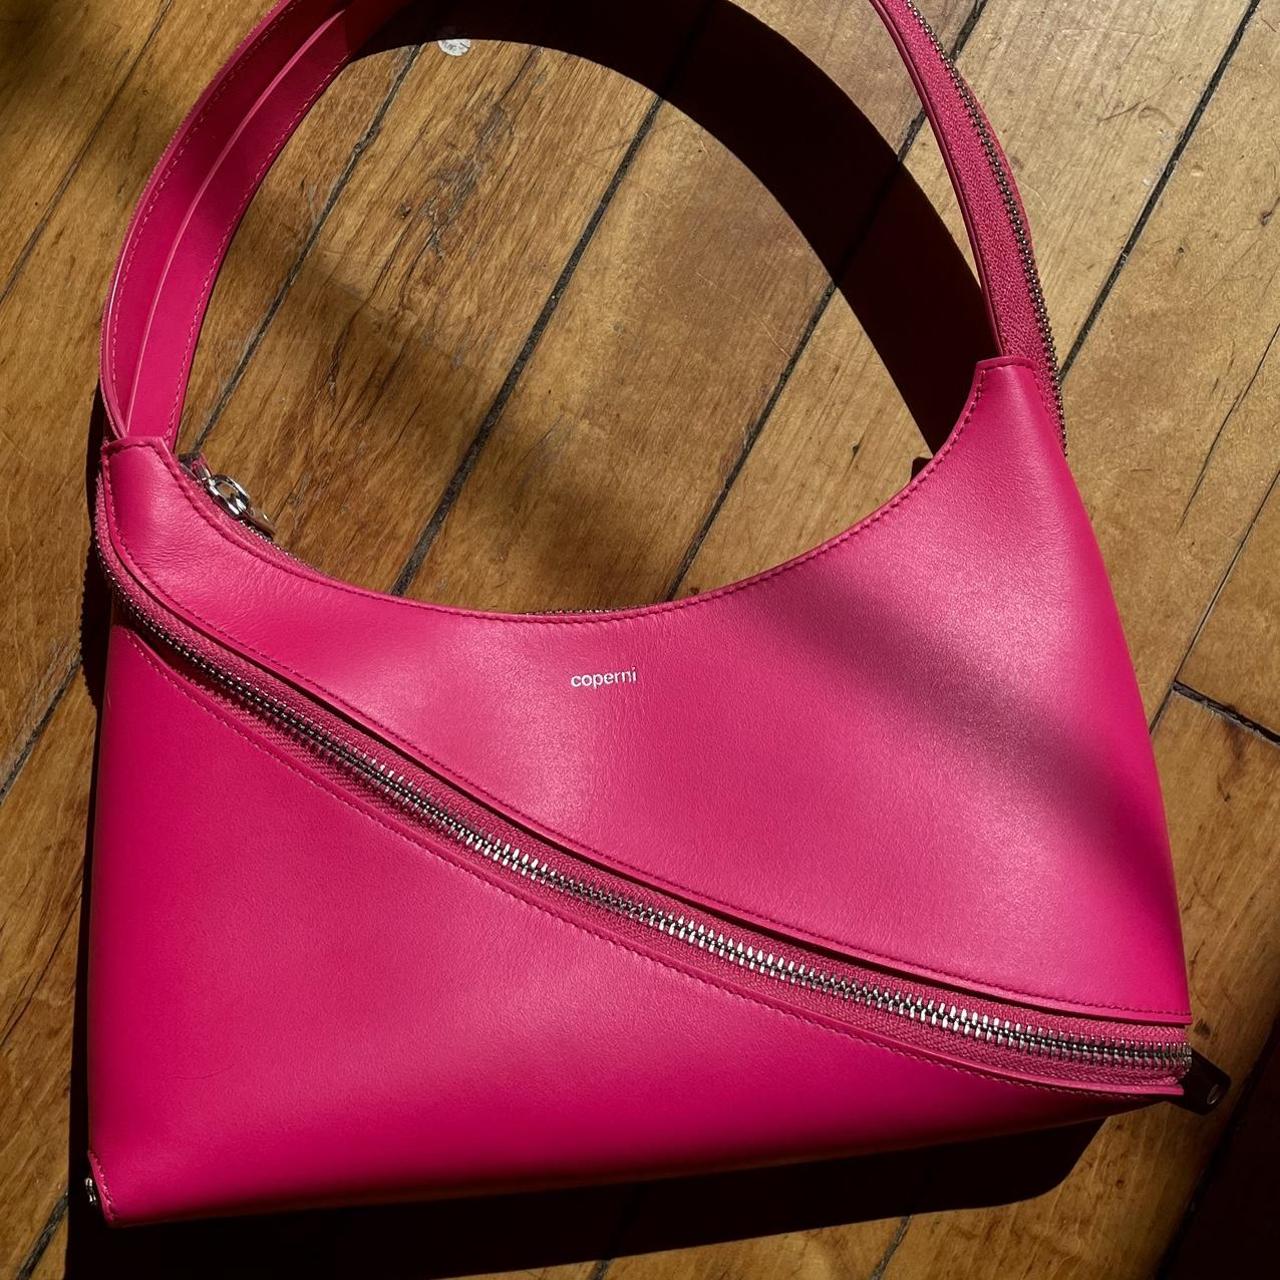 Coperni Women's Pink and Silver Bag